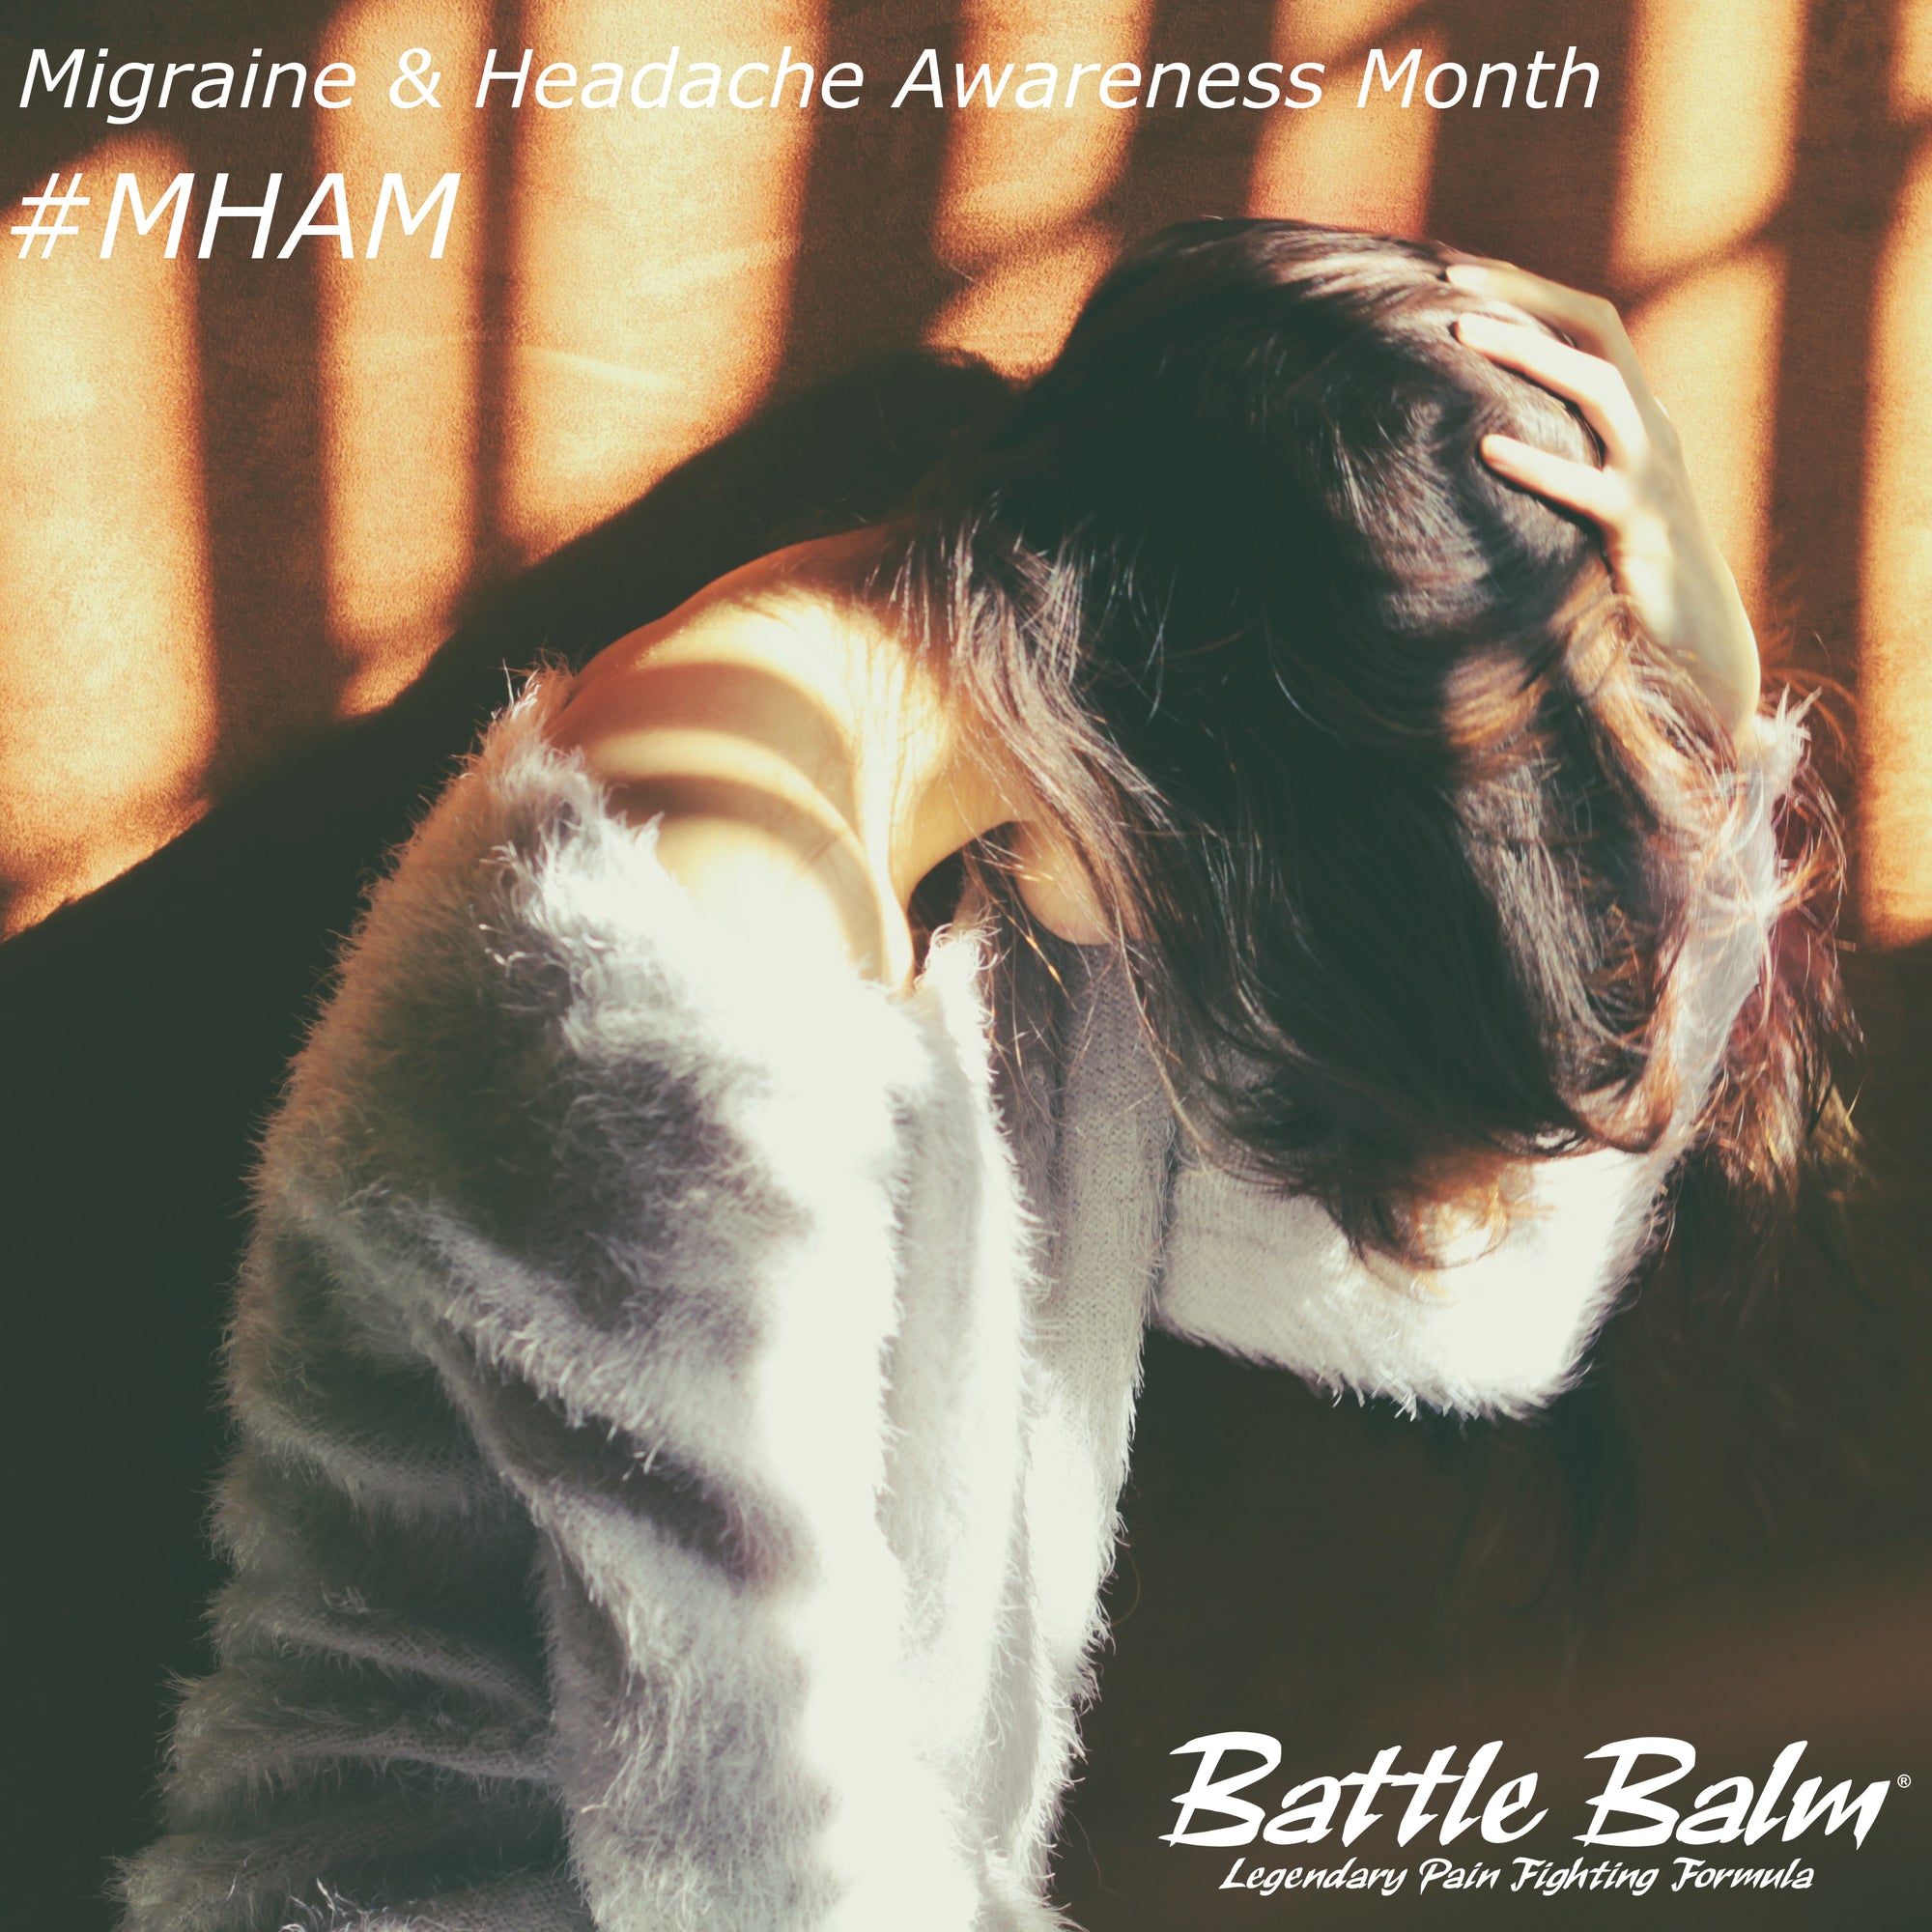 Best headache balm for migraines